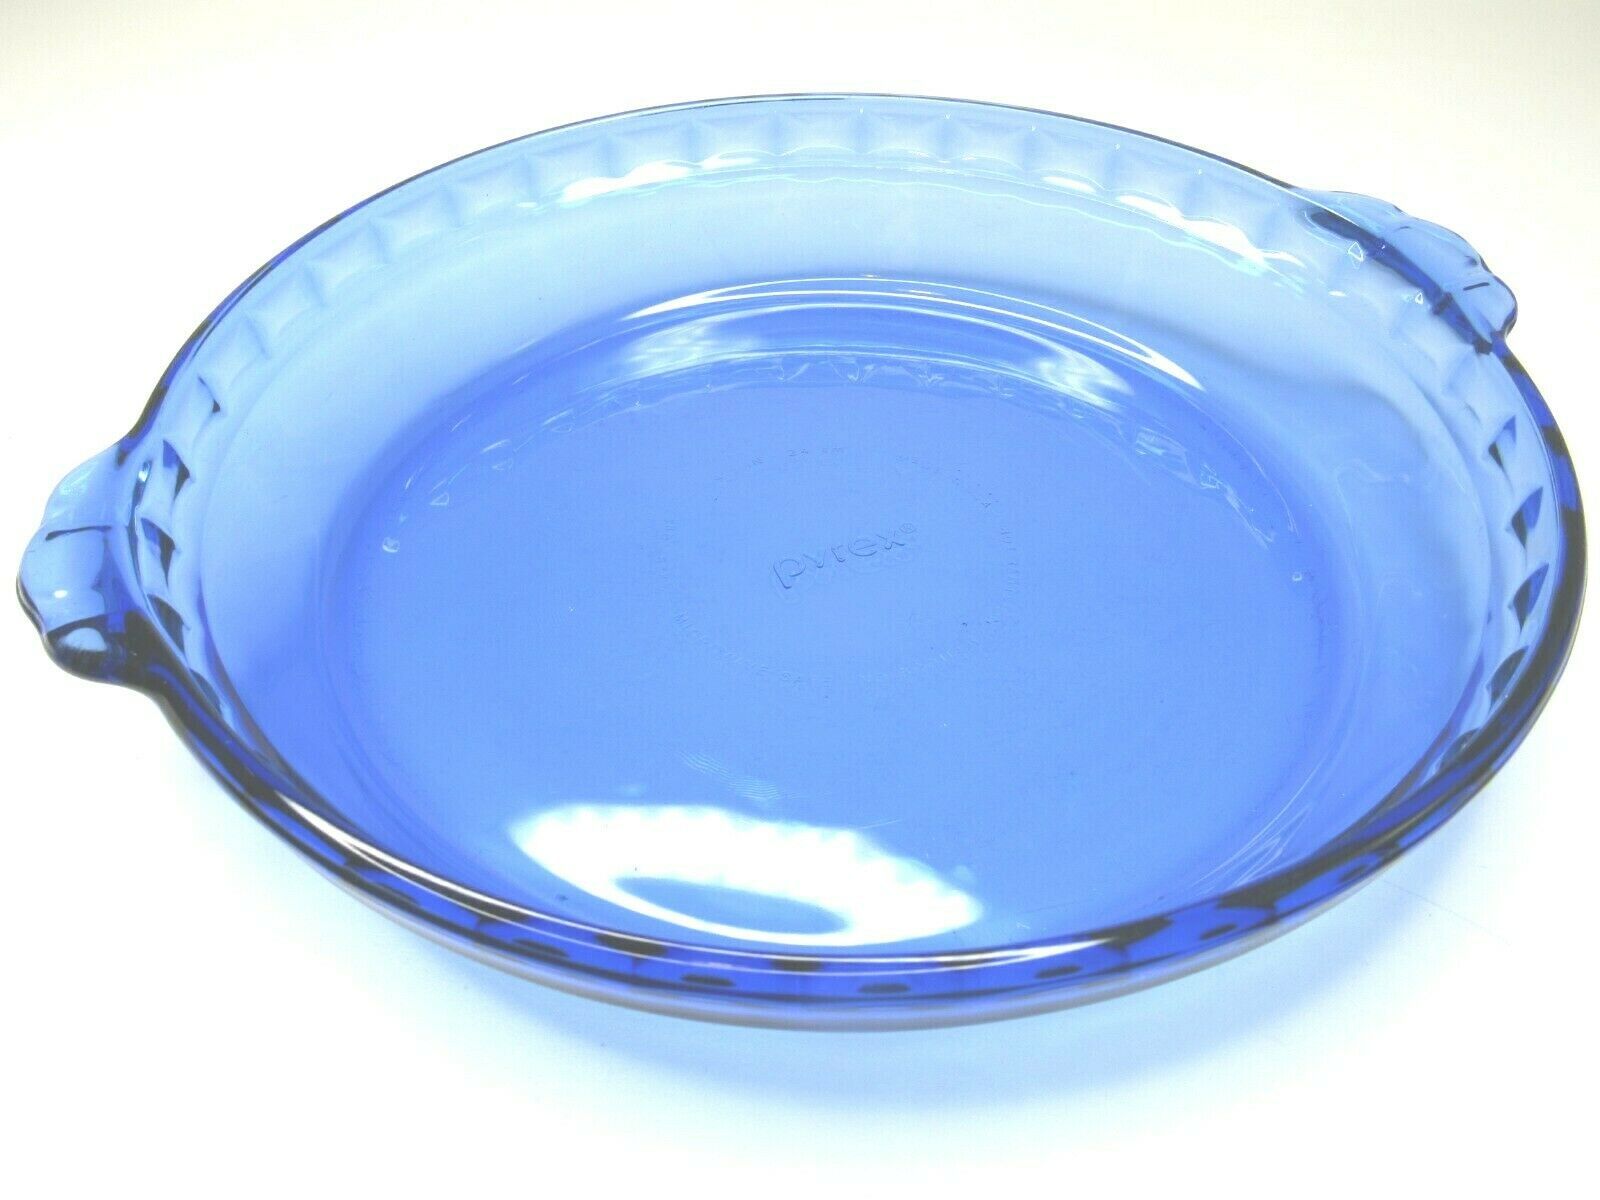 Vintage Pyrex Blue Cobalt Glass Baking Pan 229 Rib Crust Pie Plate Dish 9.5 Inch - $37.59